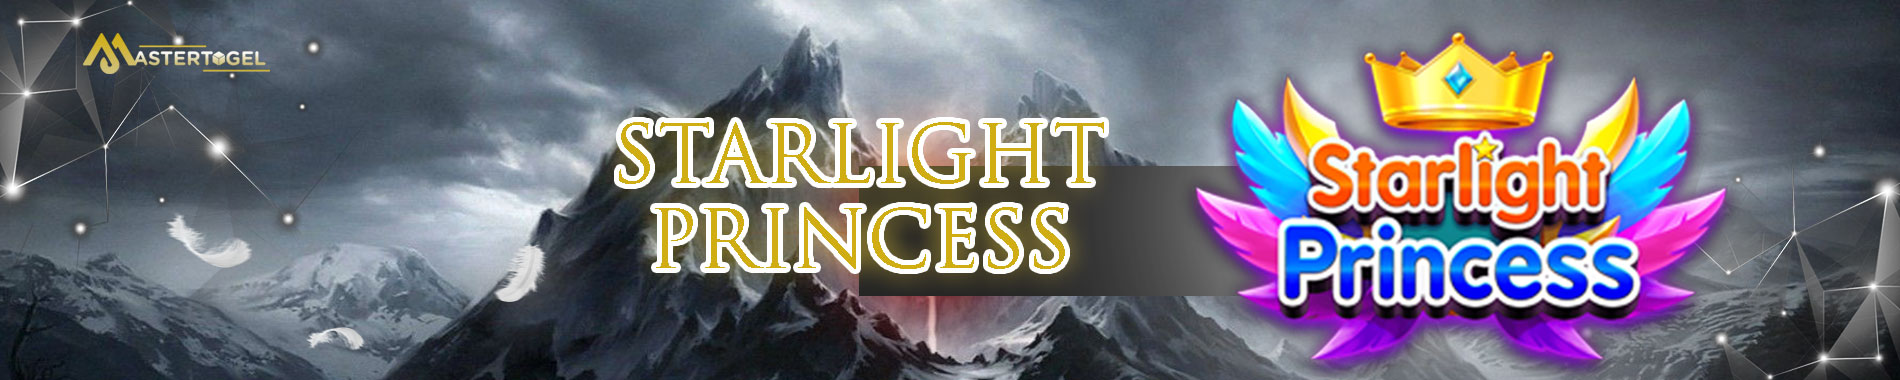 event princess starlight